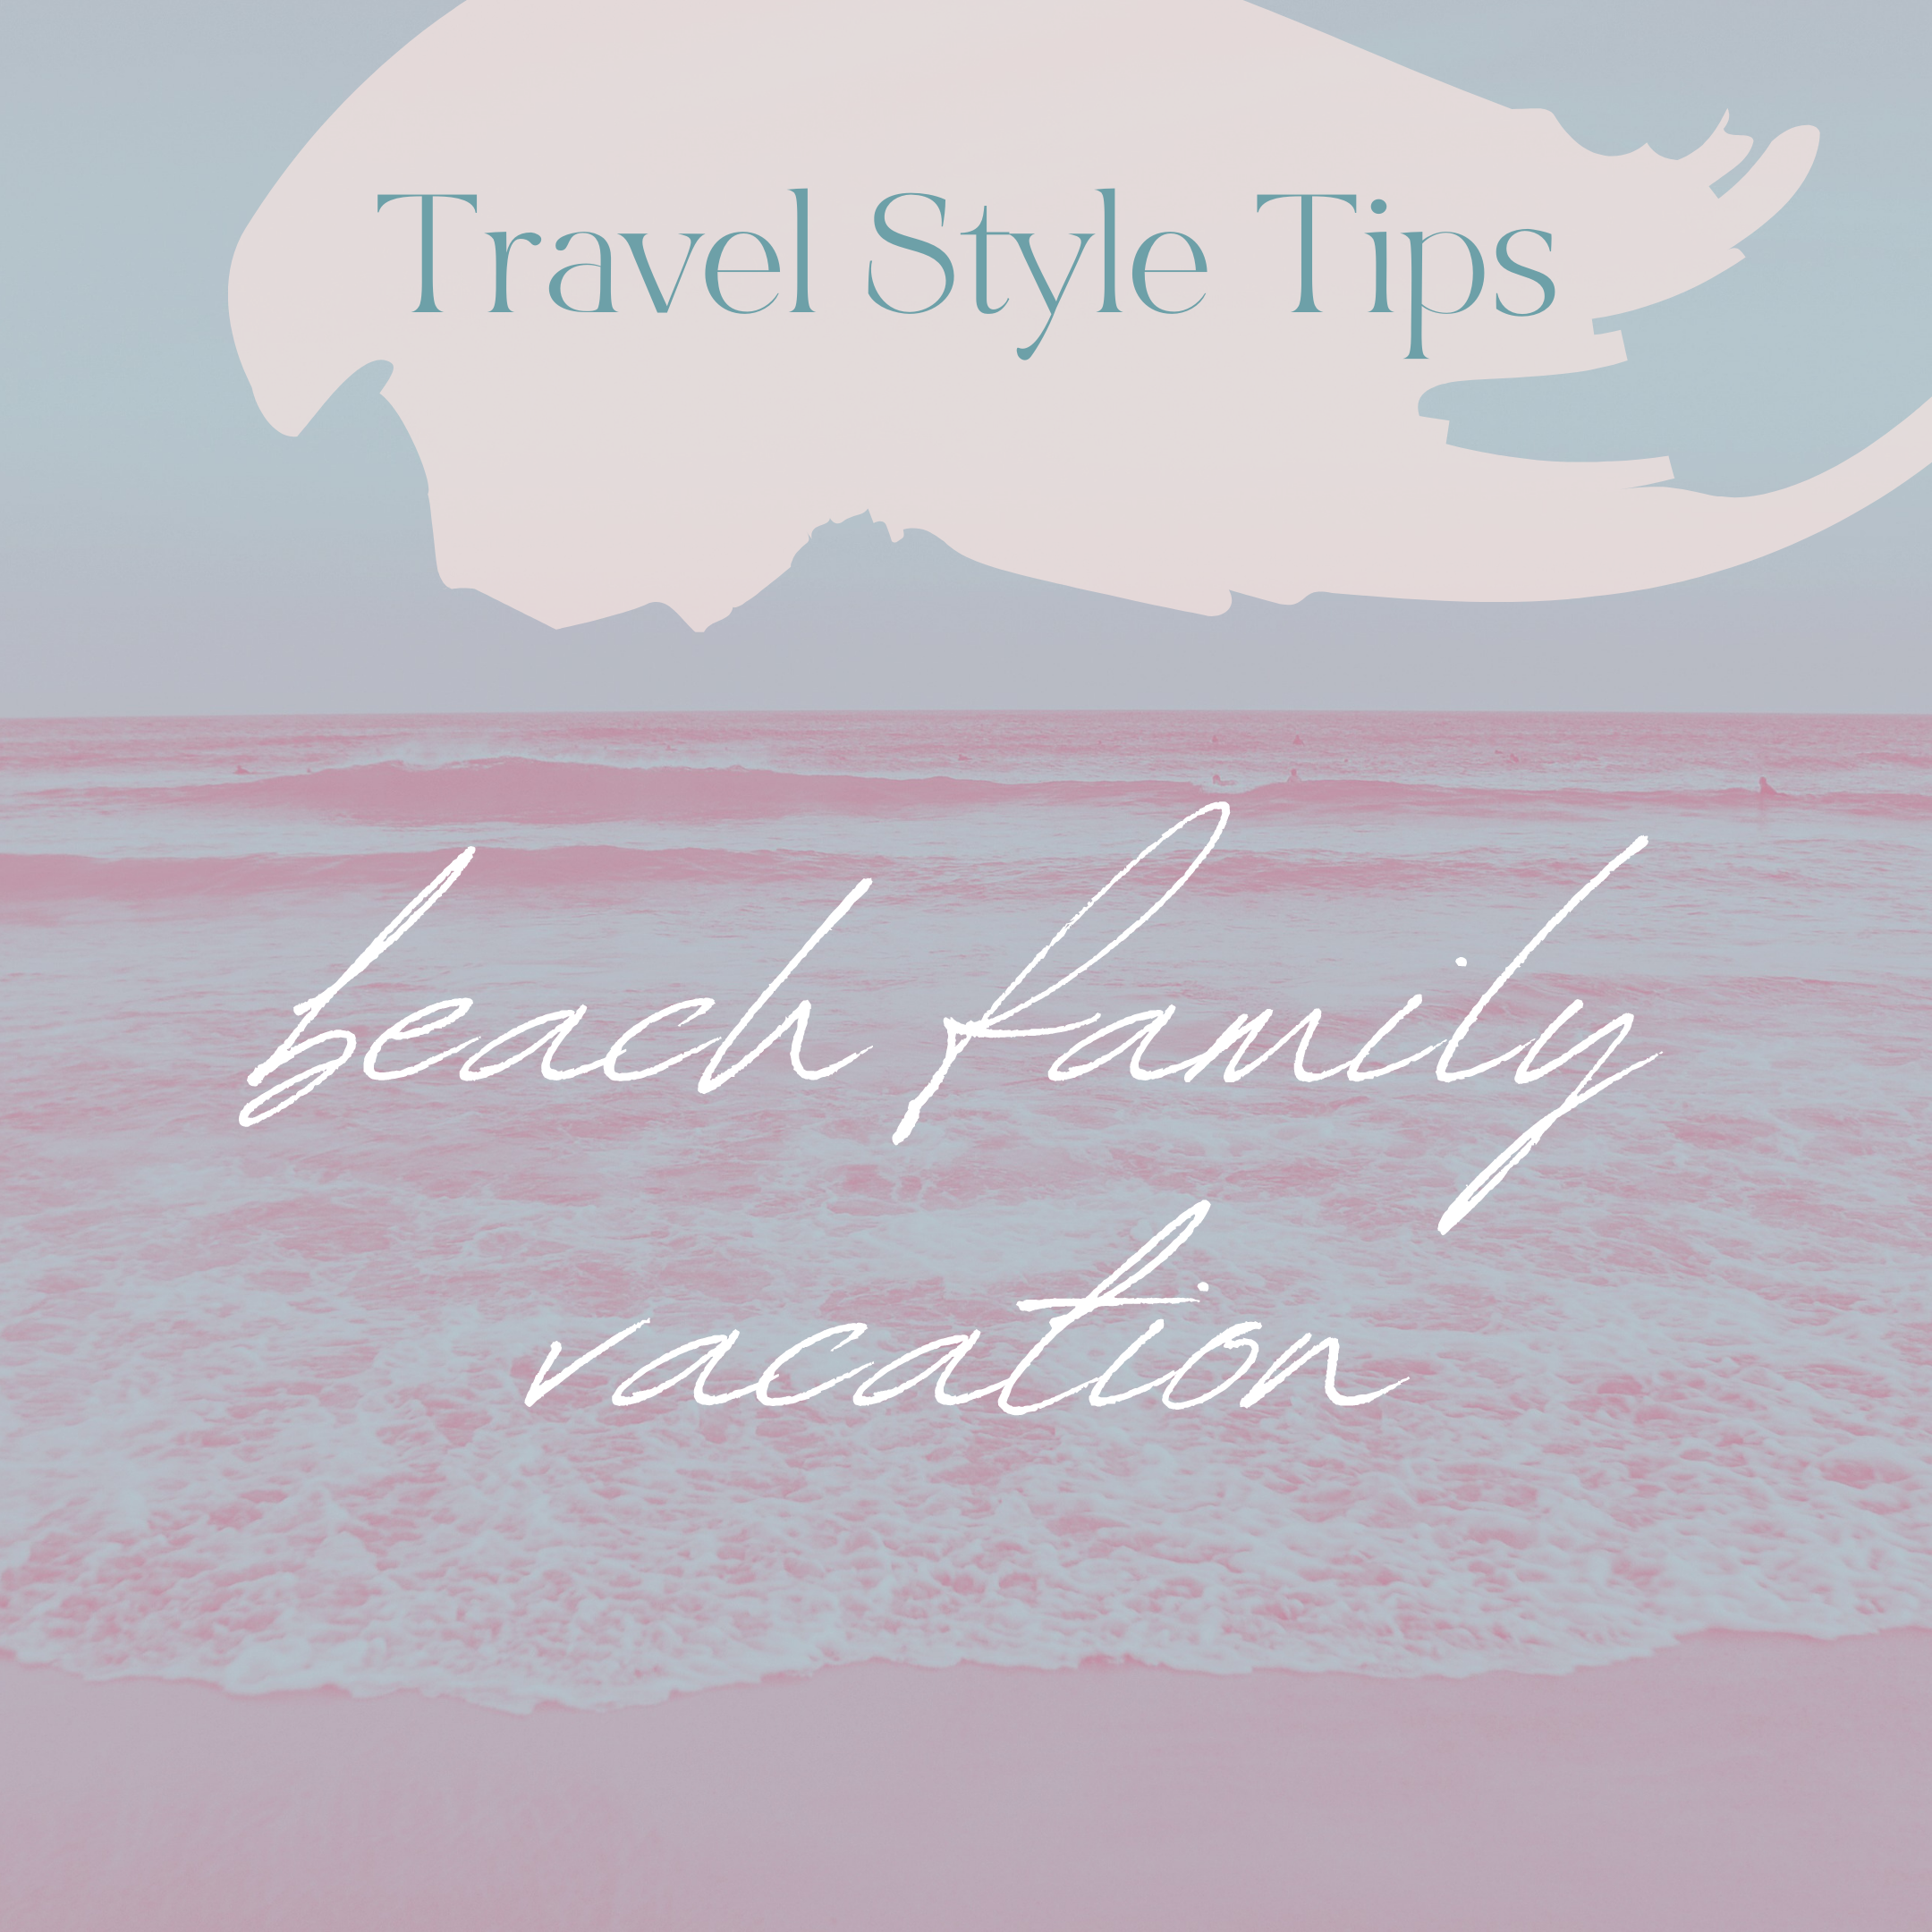 beach vacation capsule wardrobe guide